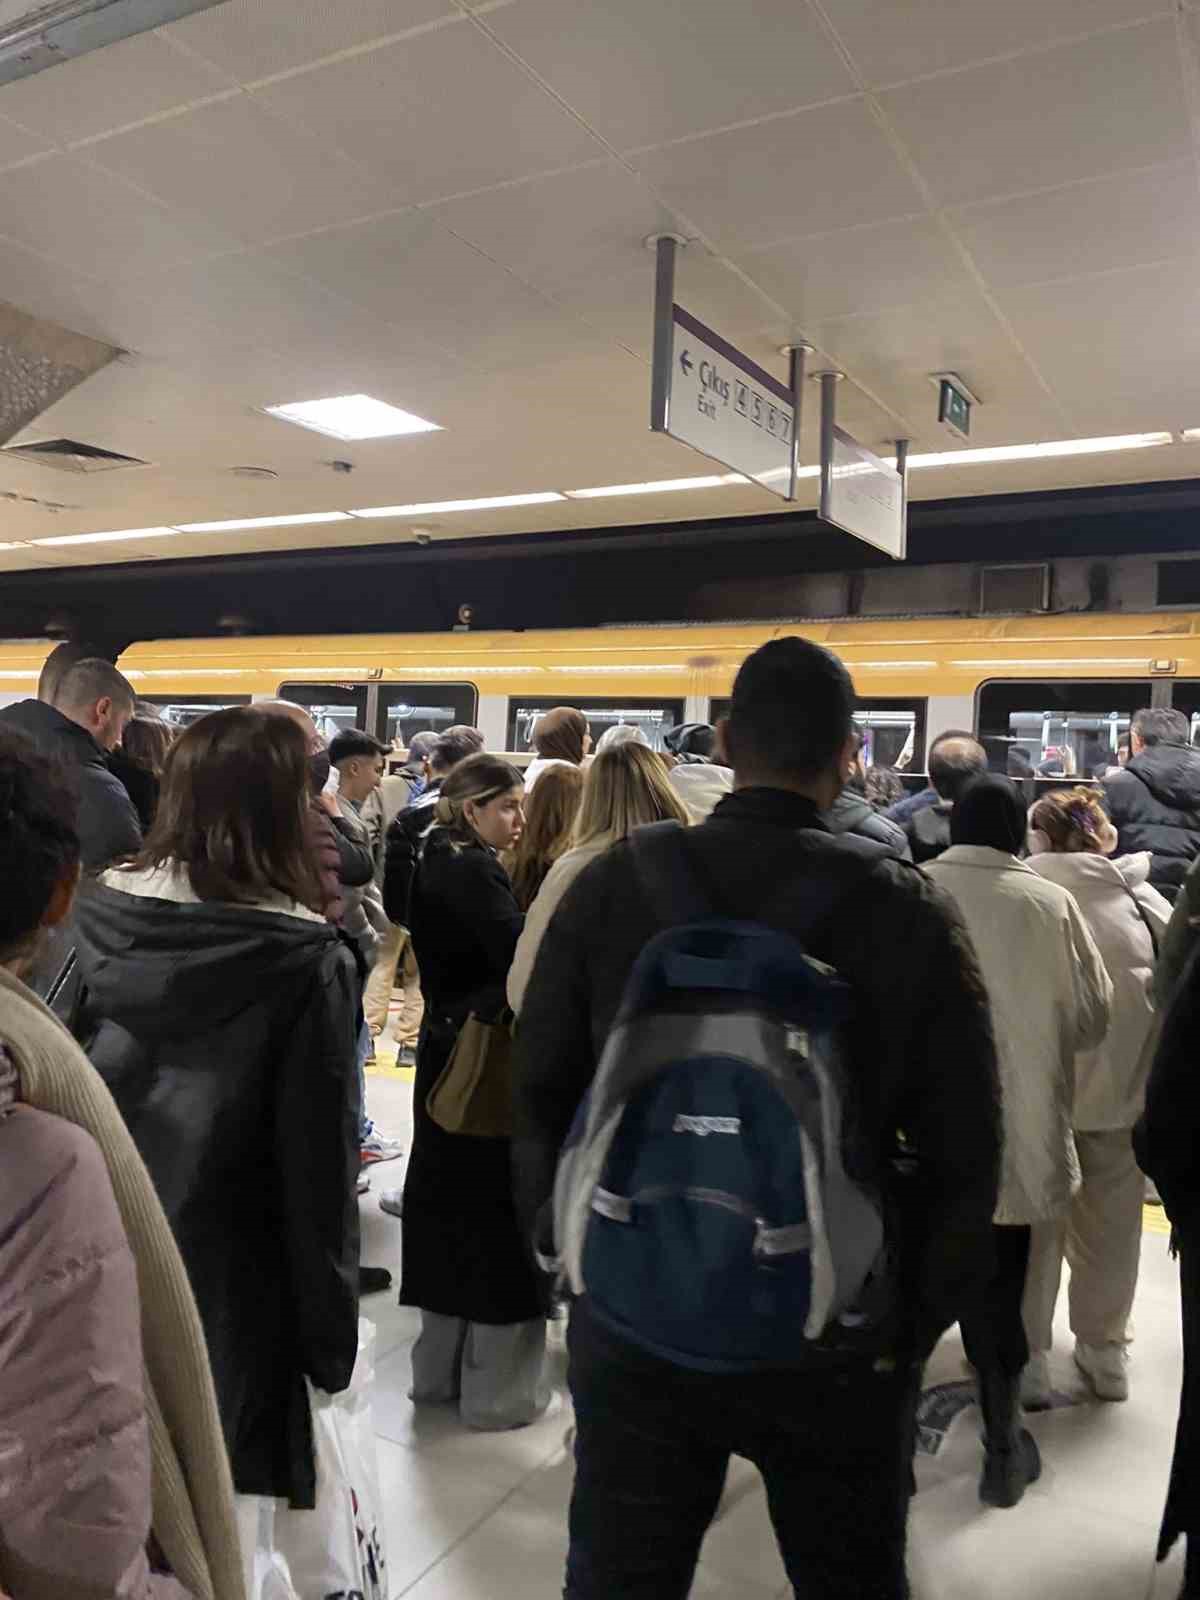 uskudar samandira metro hattinda ariza nedeniyle seferler durdu 3 aWGTJk5t